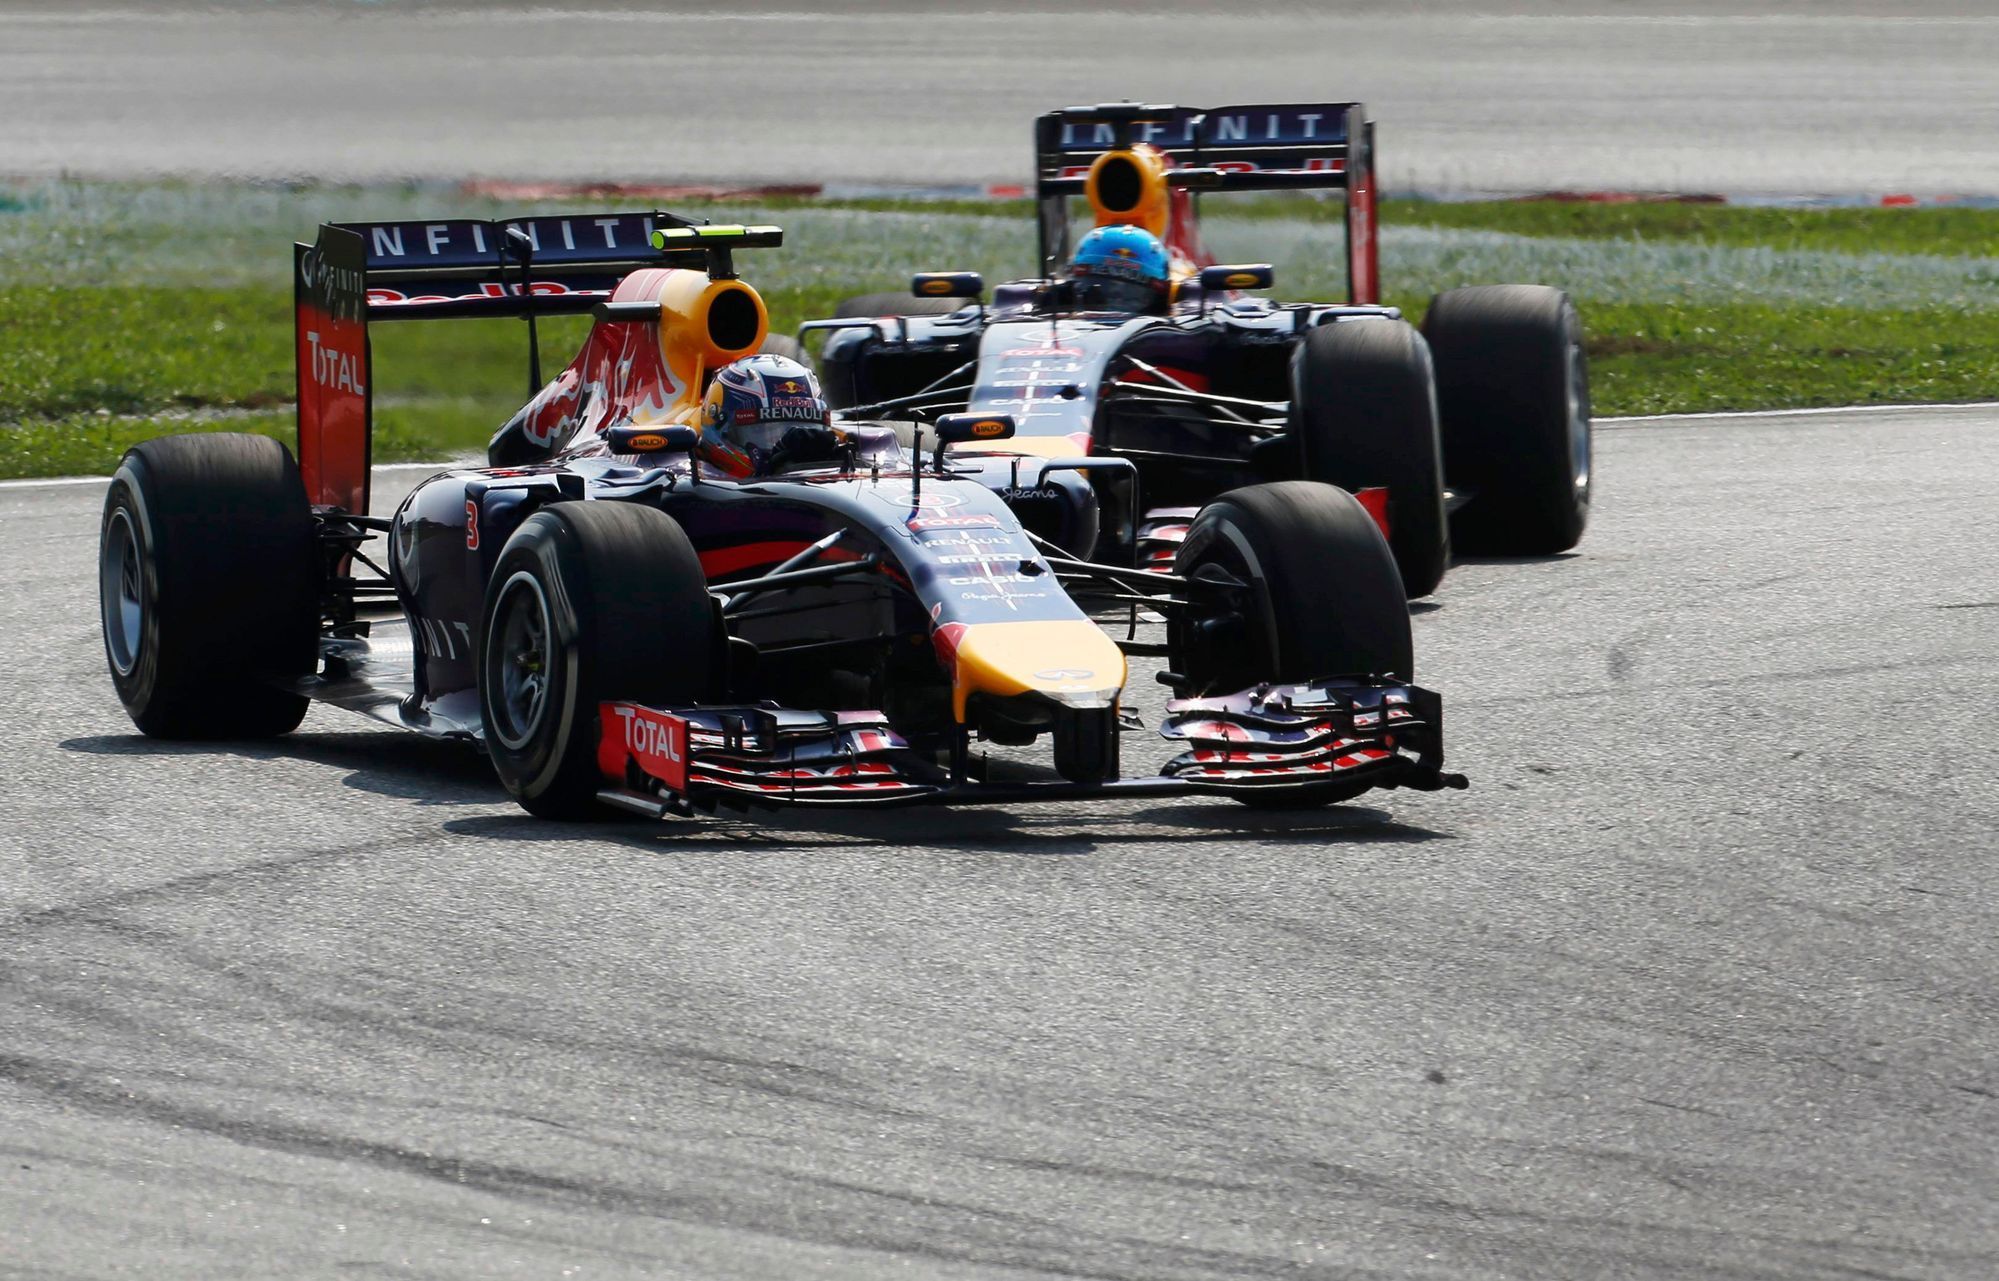 Red Bull Formula One driver Ricciardo drives ahead of team mate Vettel during the Malaysian F1 Grand Prix at Sepang International Circuit outside Kuala Lumpur